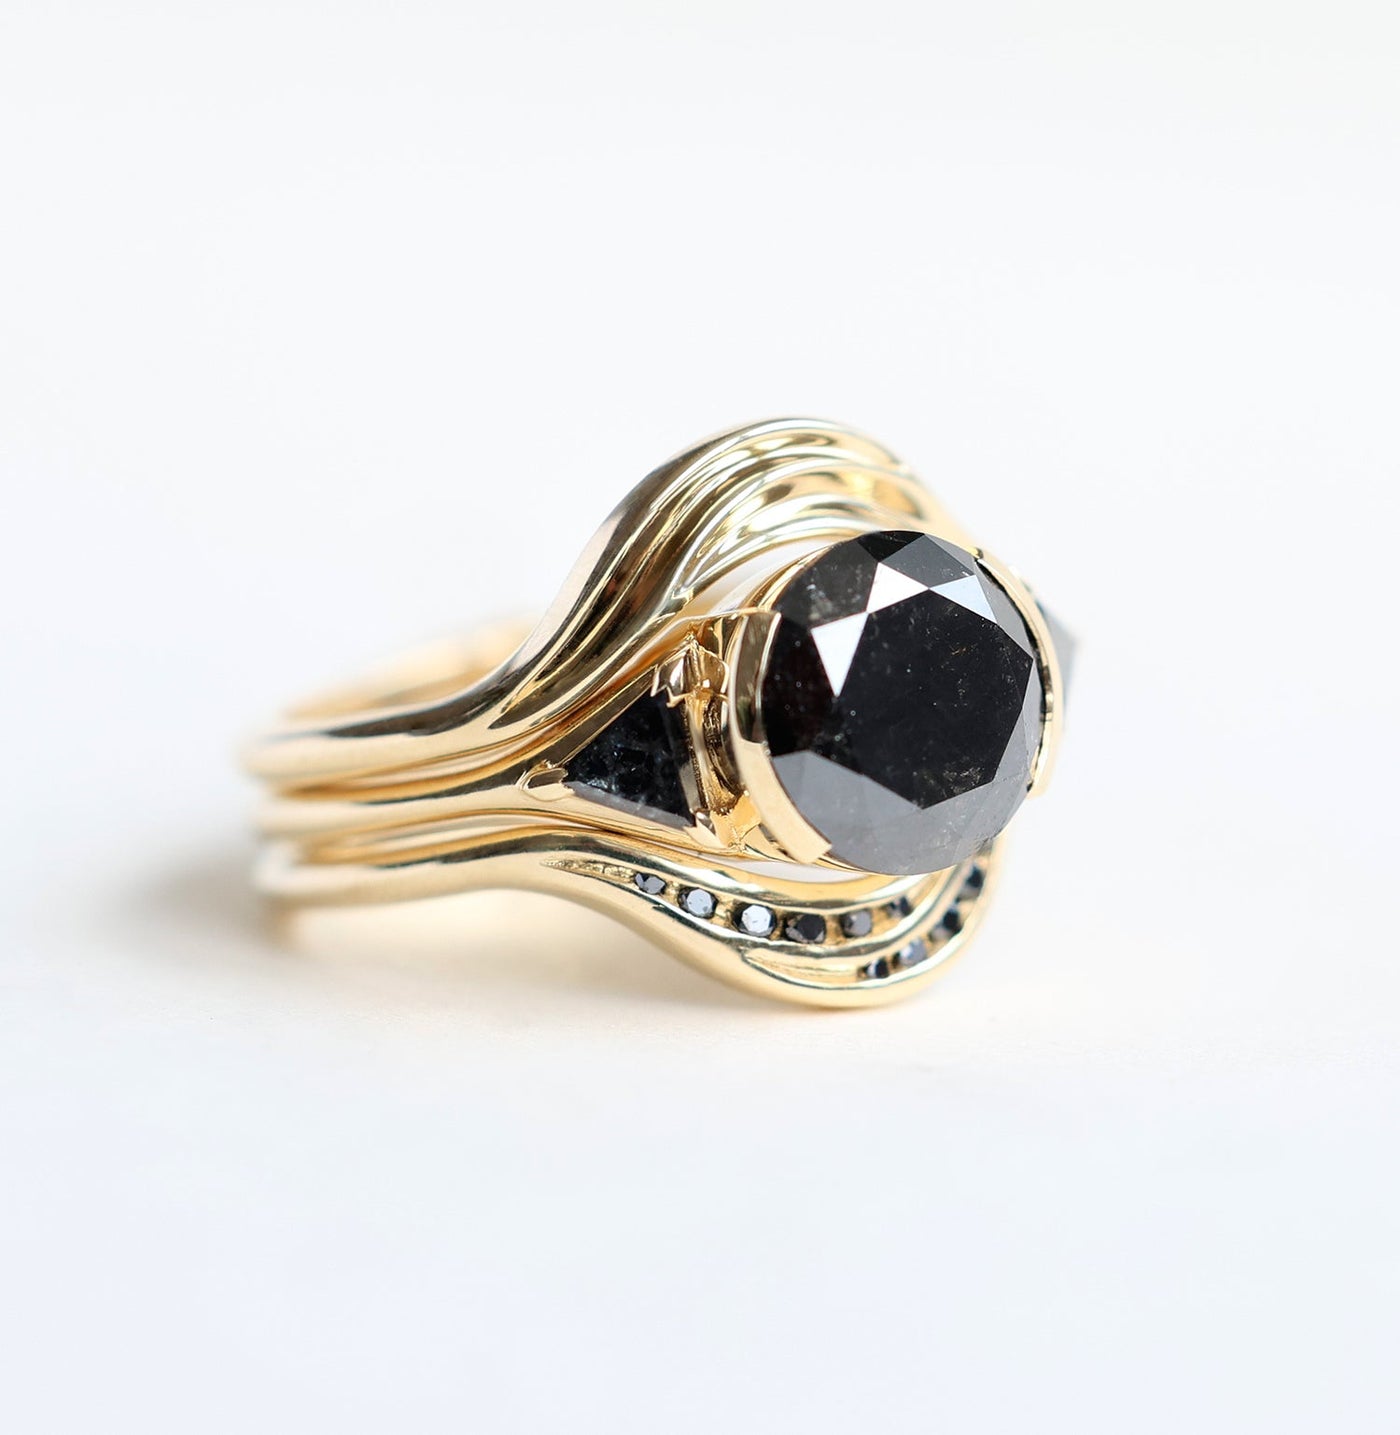 3-Stone Round Black Diamond Ring with 2 Side Triangle Cut Black Diamonds and Diamond Nesting Band